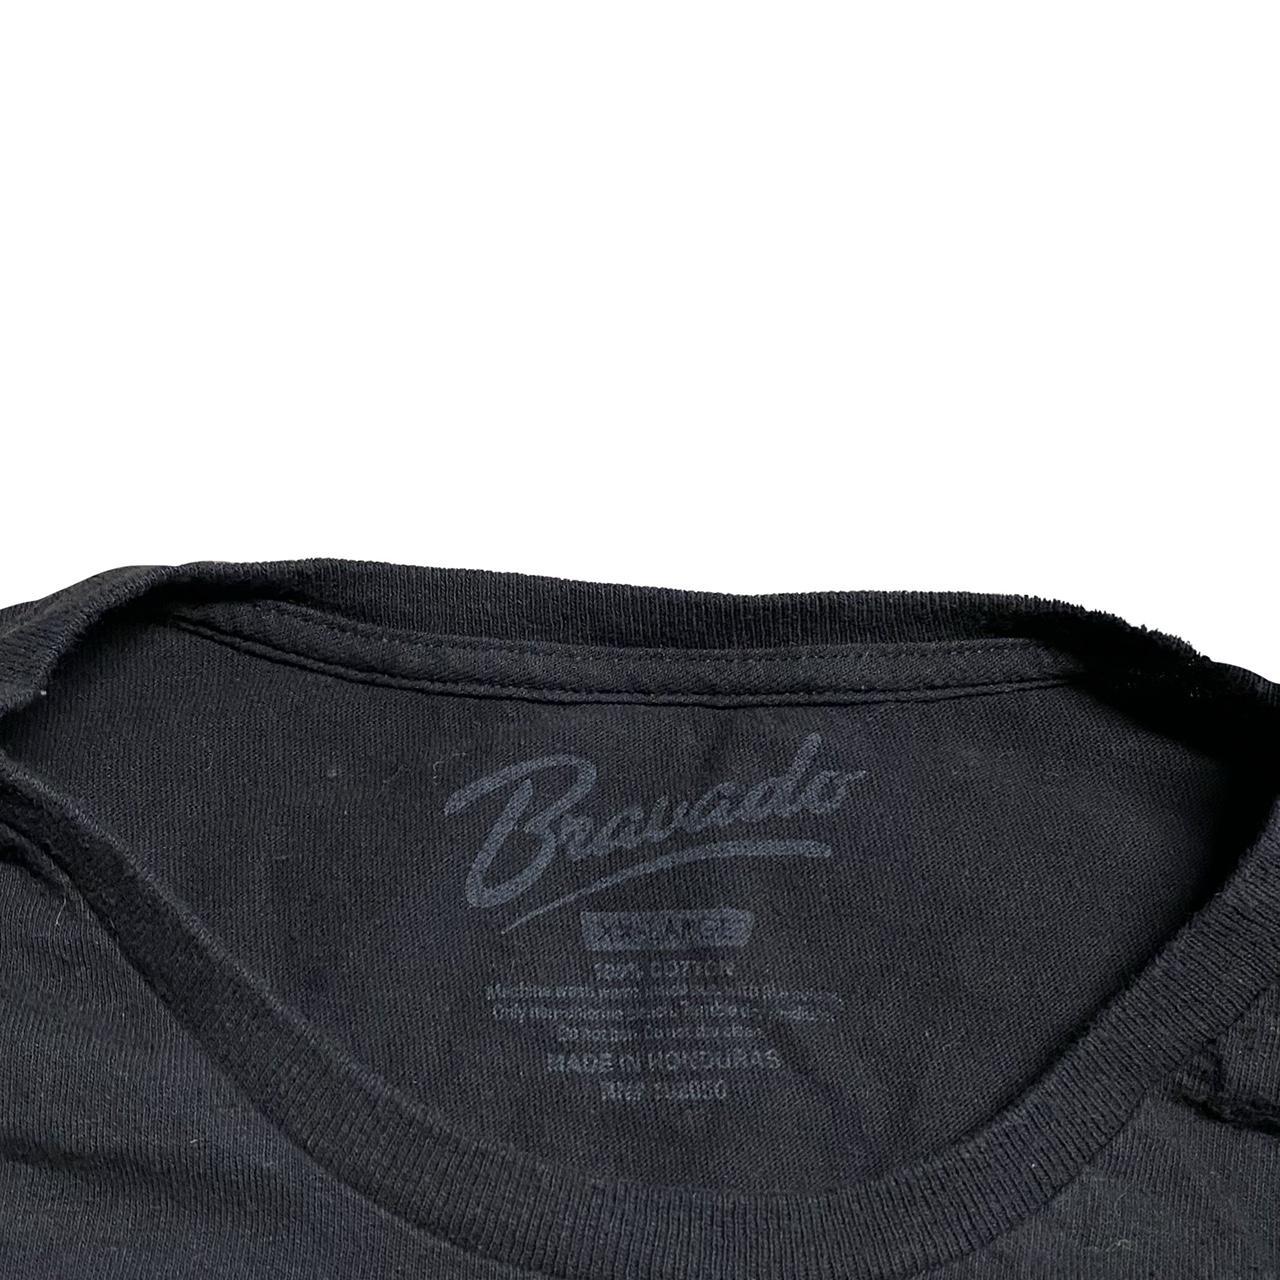 Bravado Men's Black and Blue T-shirt (2)